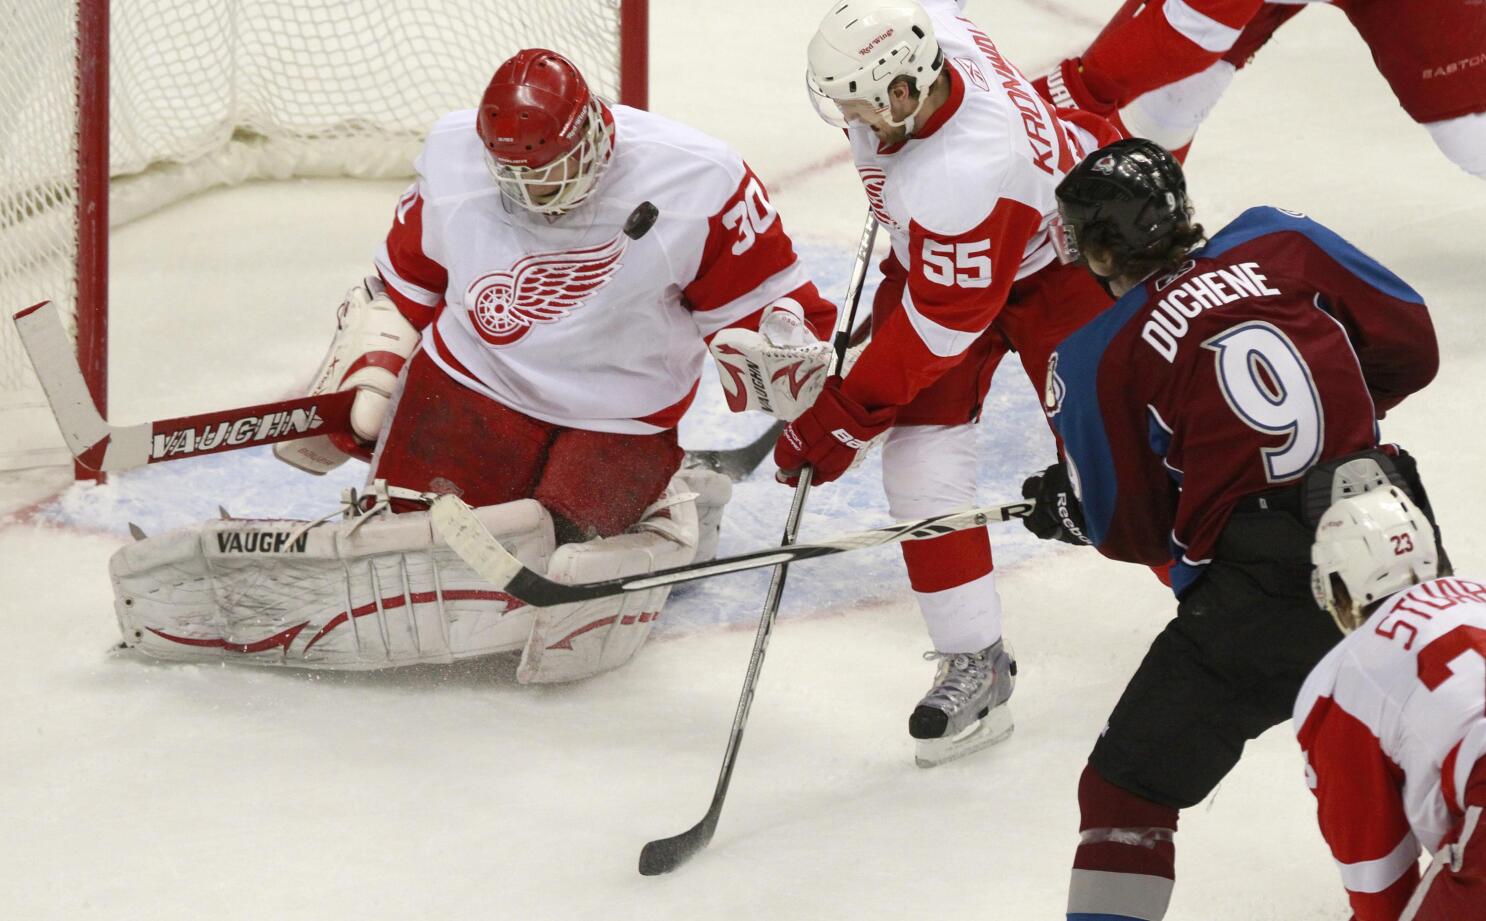 Photo: Detroit Red Wings goalie Chris Osgood - 